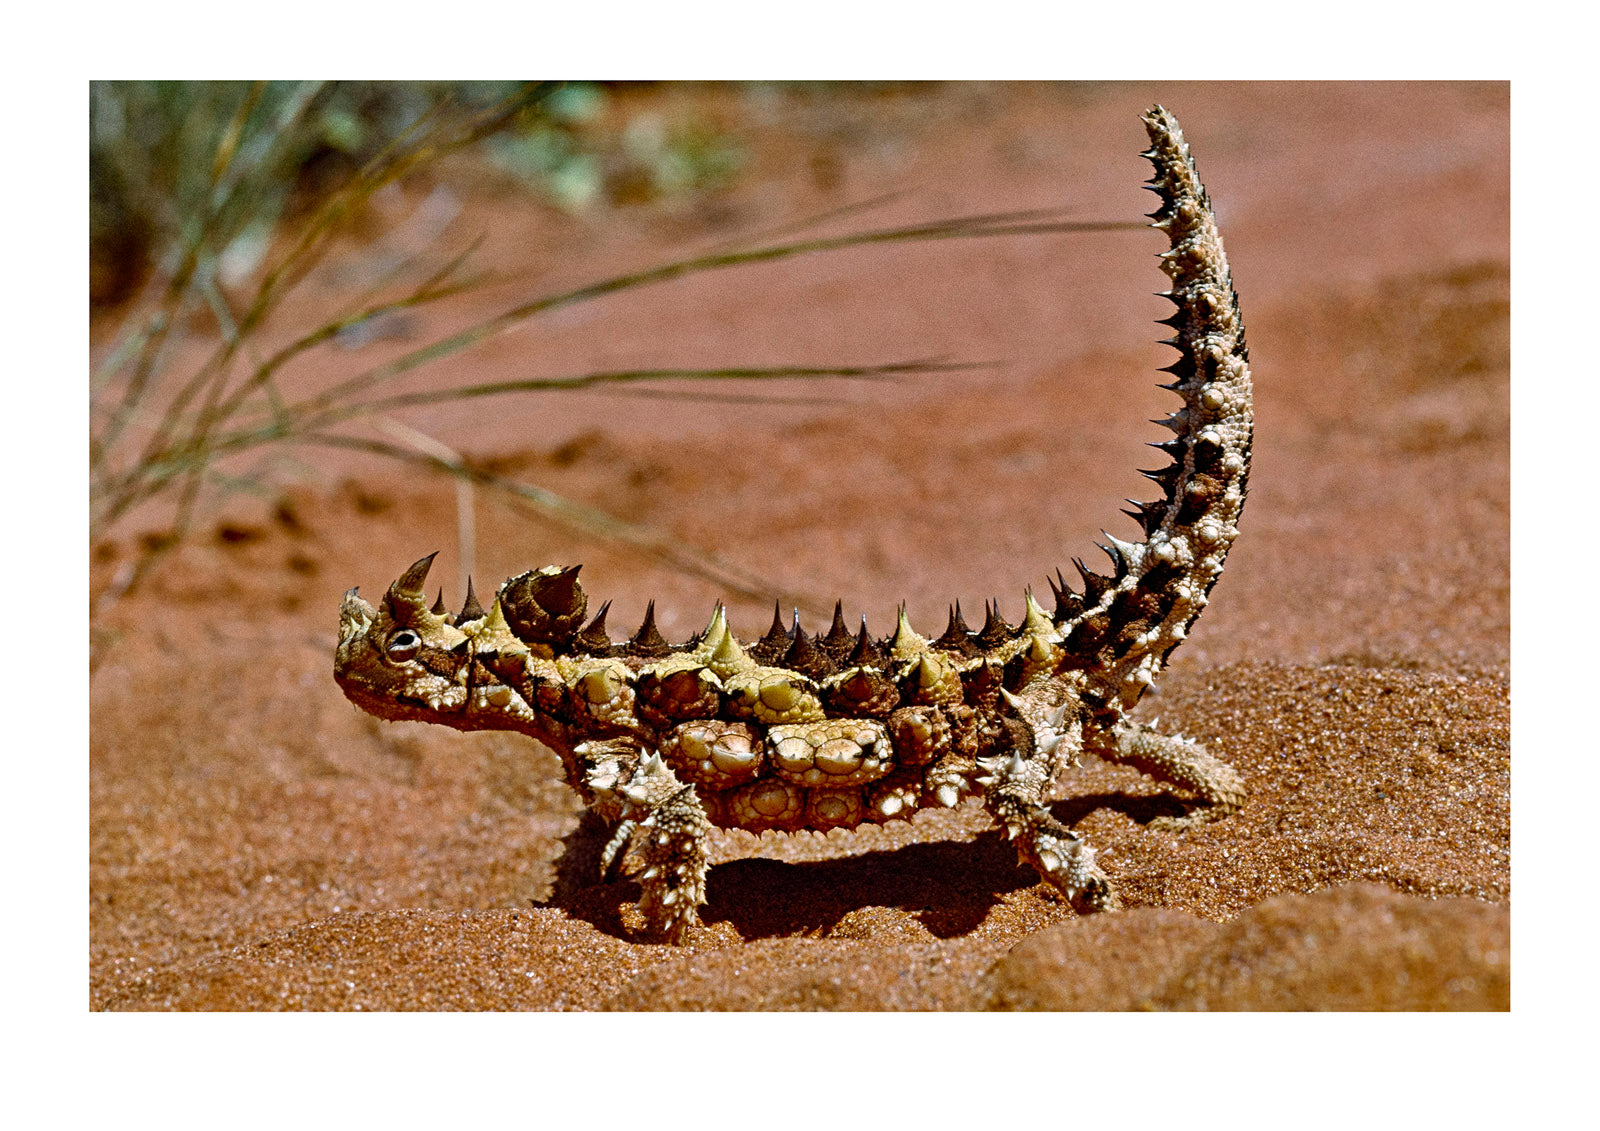 An Australian thorny devil with an erect tail moves across a sand dune South Australia.